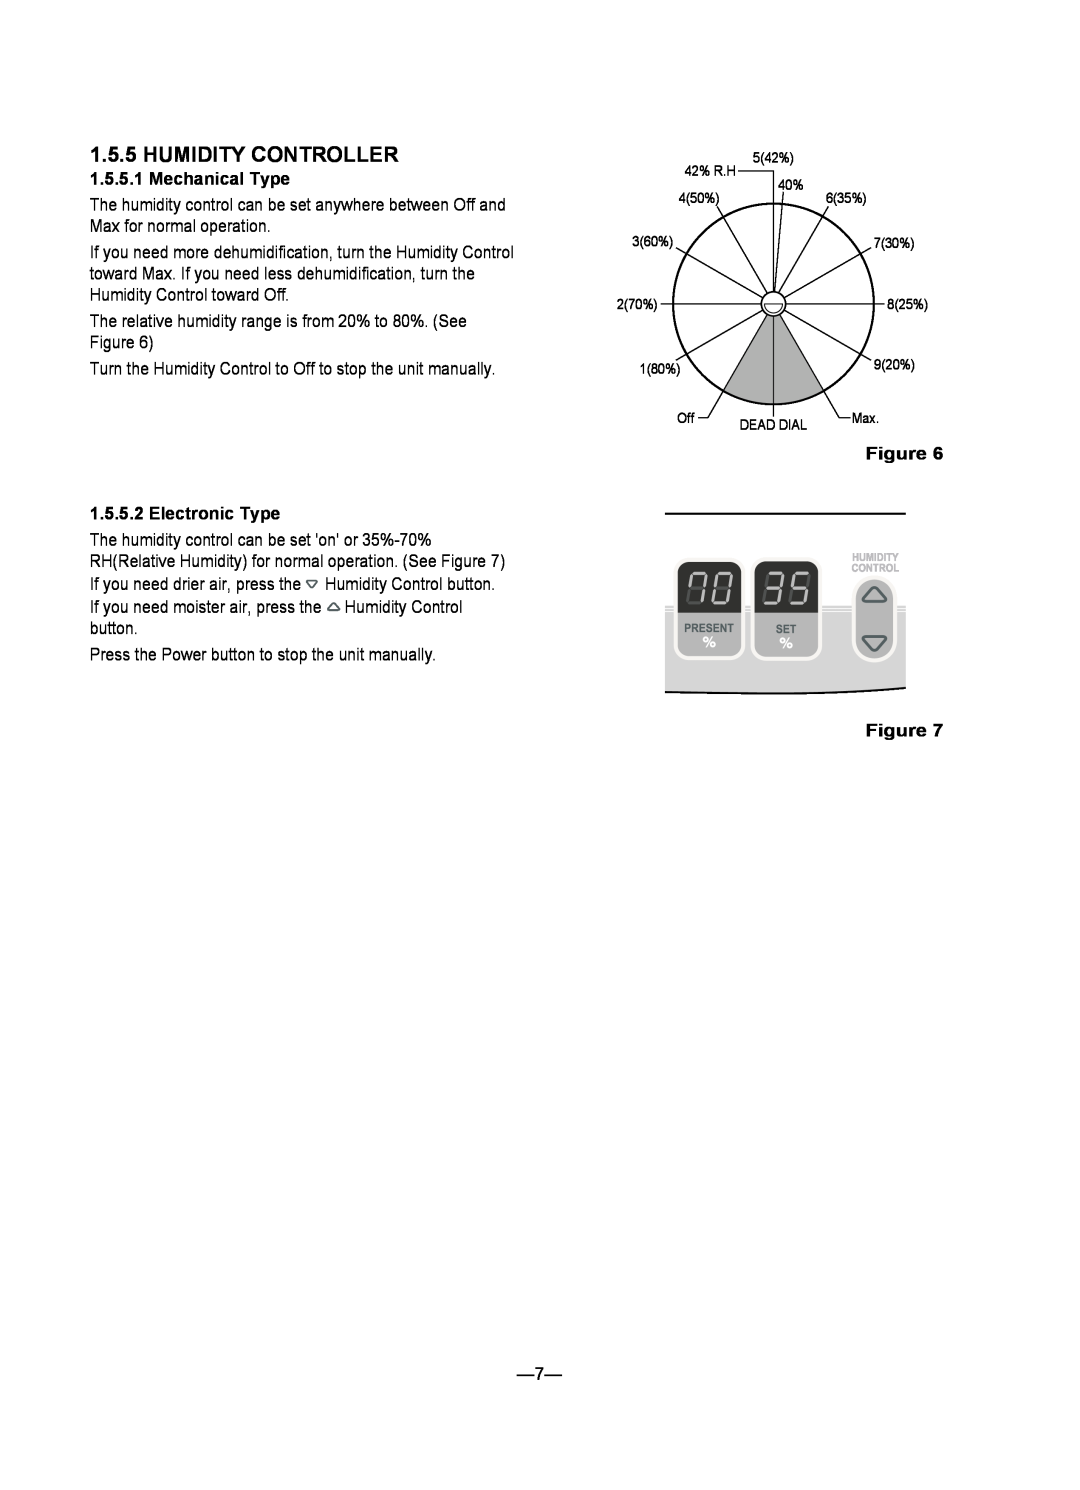 Heat Controller BHD-651-C, BHD-501-B, BHD-301-C Humidity Controller, Mechanical Type, Electronic Type, Figure Figure 